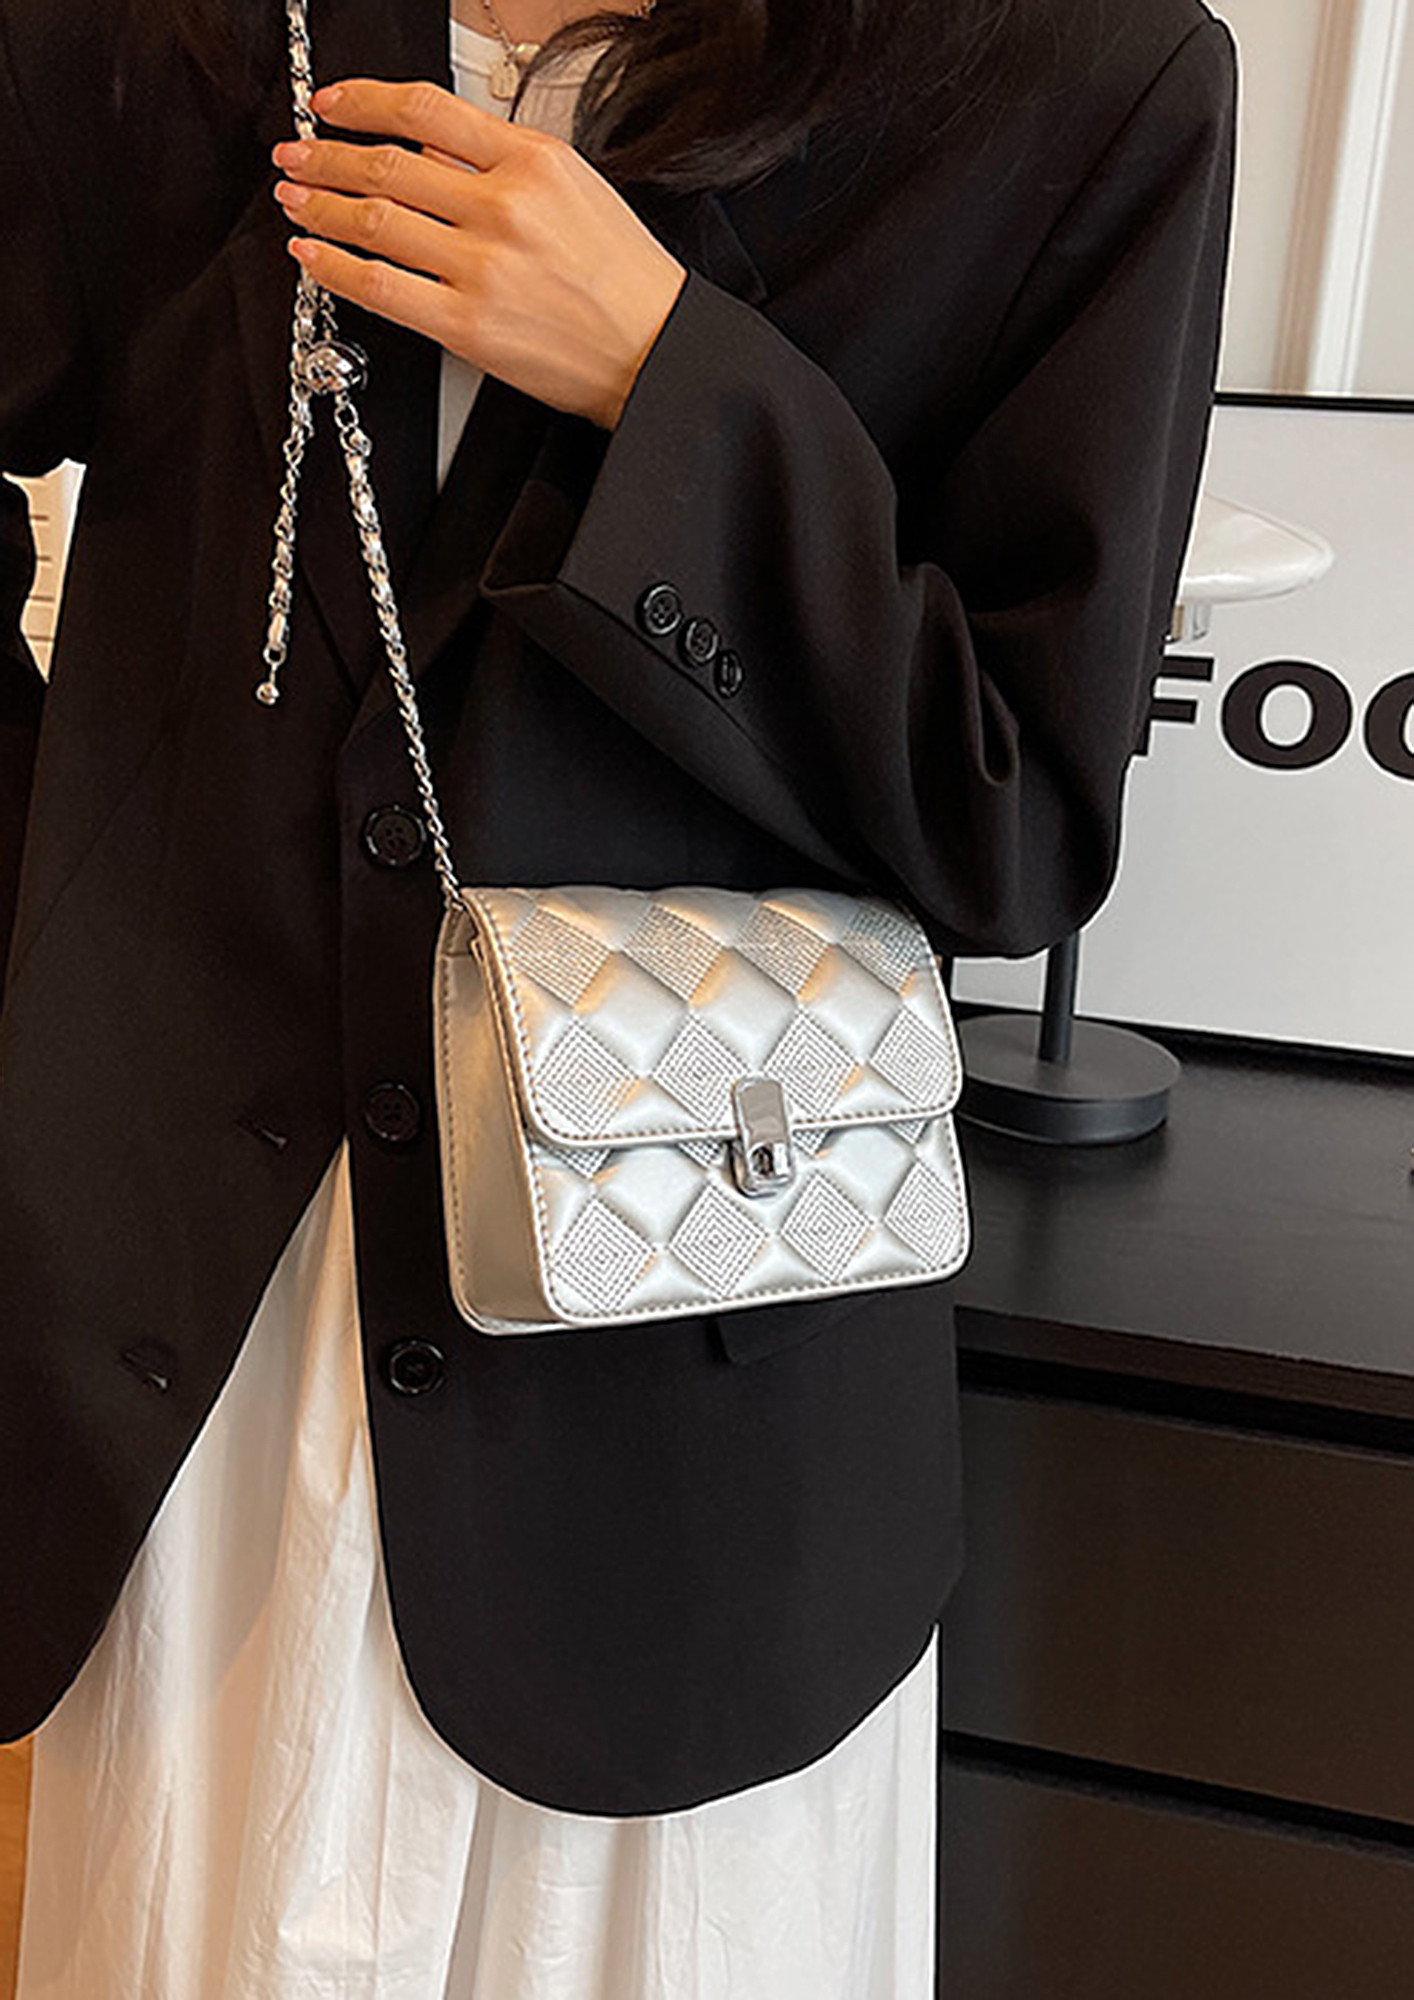 Buy Esbeda Silver Embellished Small Sling Handbag Online At Best Price @  Tata CLiQ